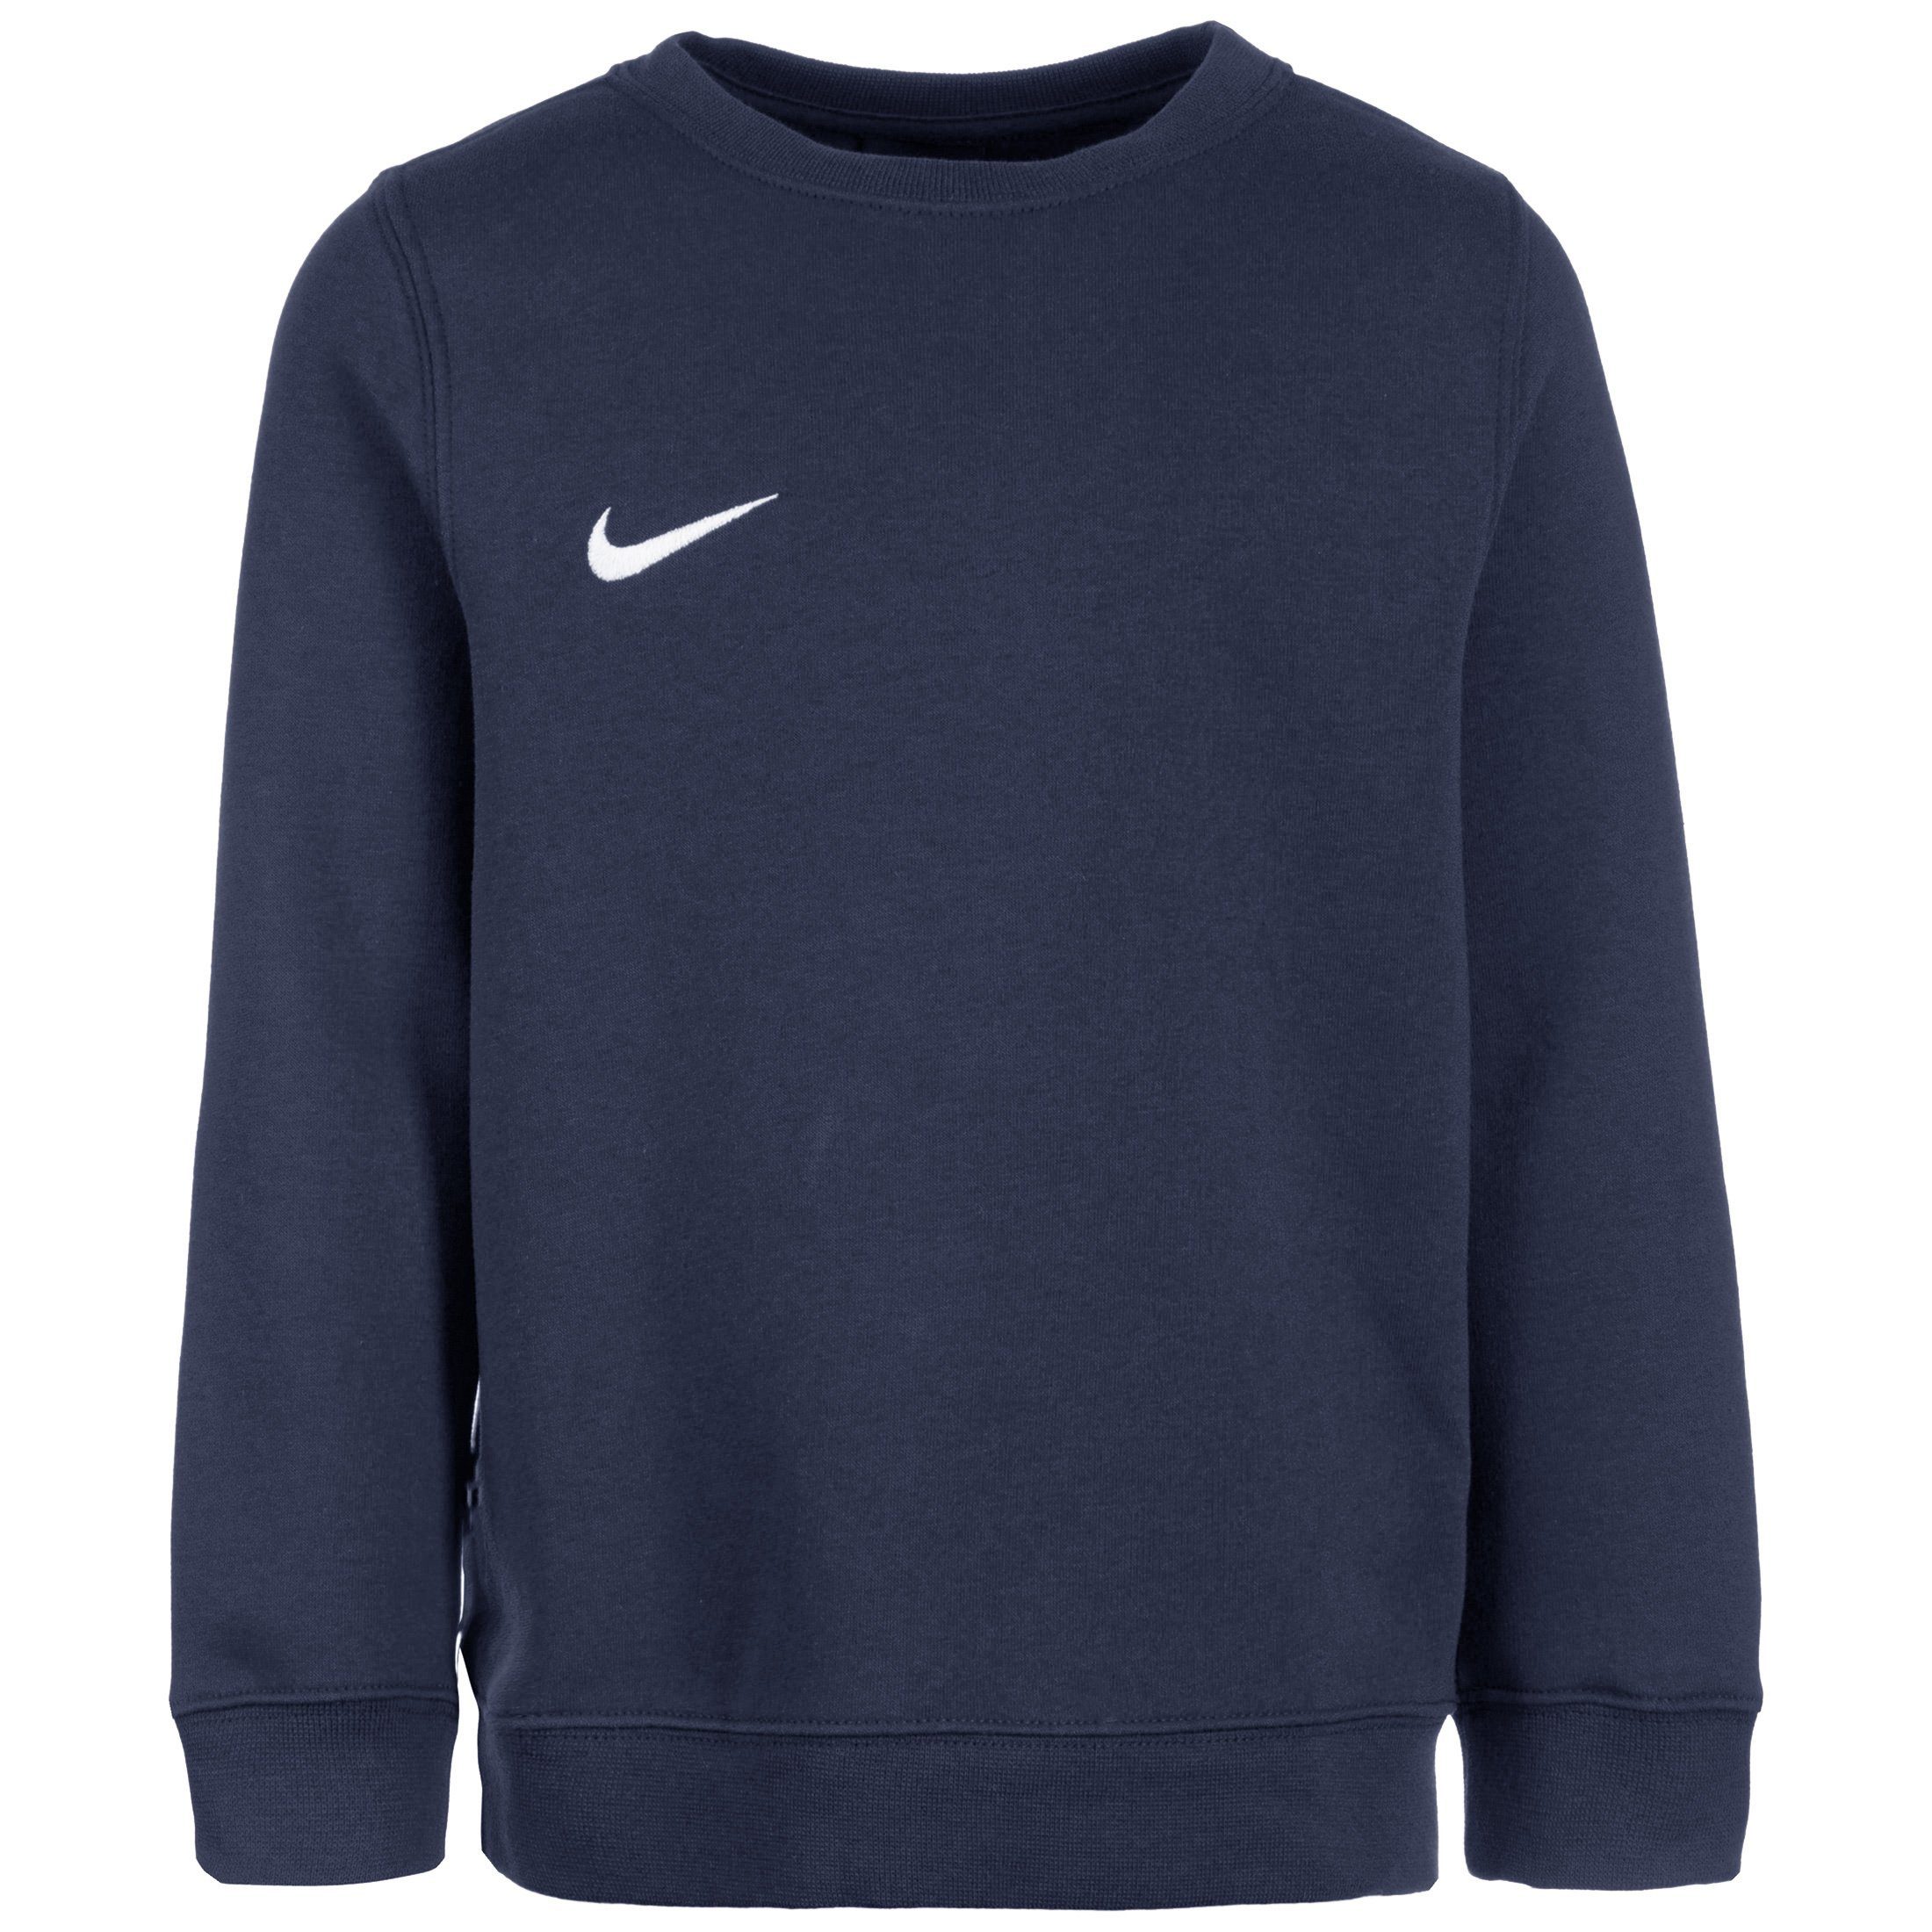 Nike Sweatshirt »Club19 Crew Fleece Tm«, Nike Club 19 Teamsport-Kollektion  online kaufen | OTTO